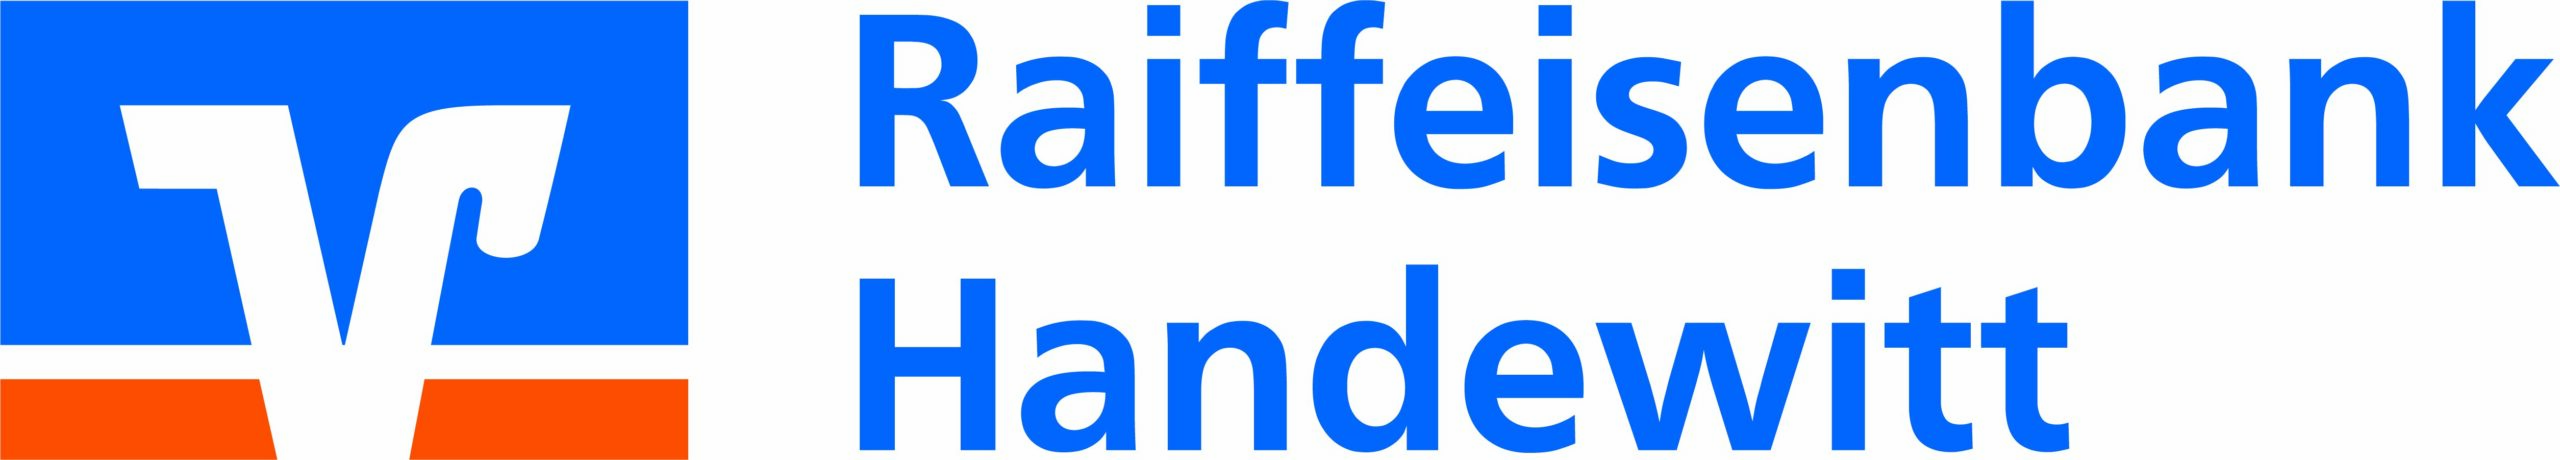 Raiffeisenbank Handewitt